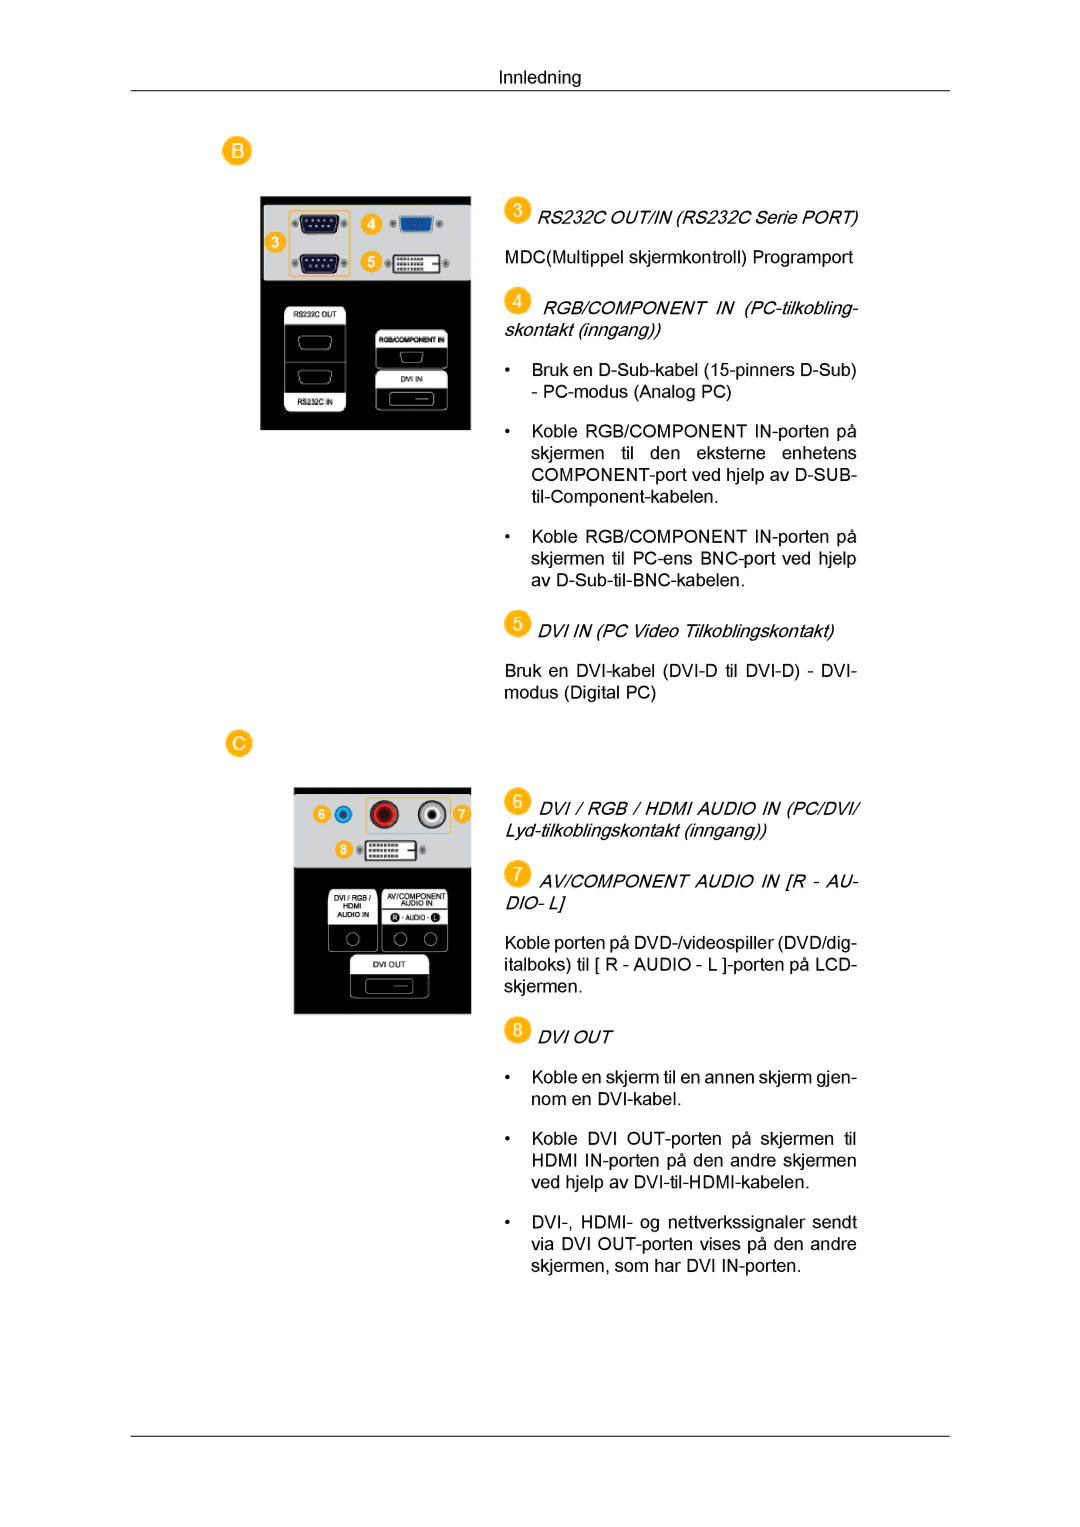 Samsung LH70TCUMBG/EN manual AV/COMPONENT Audio in R AU- DIO- L 